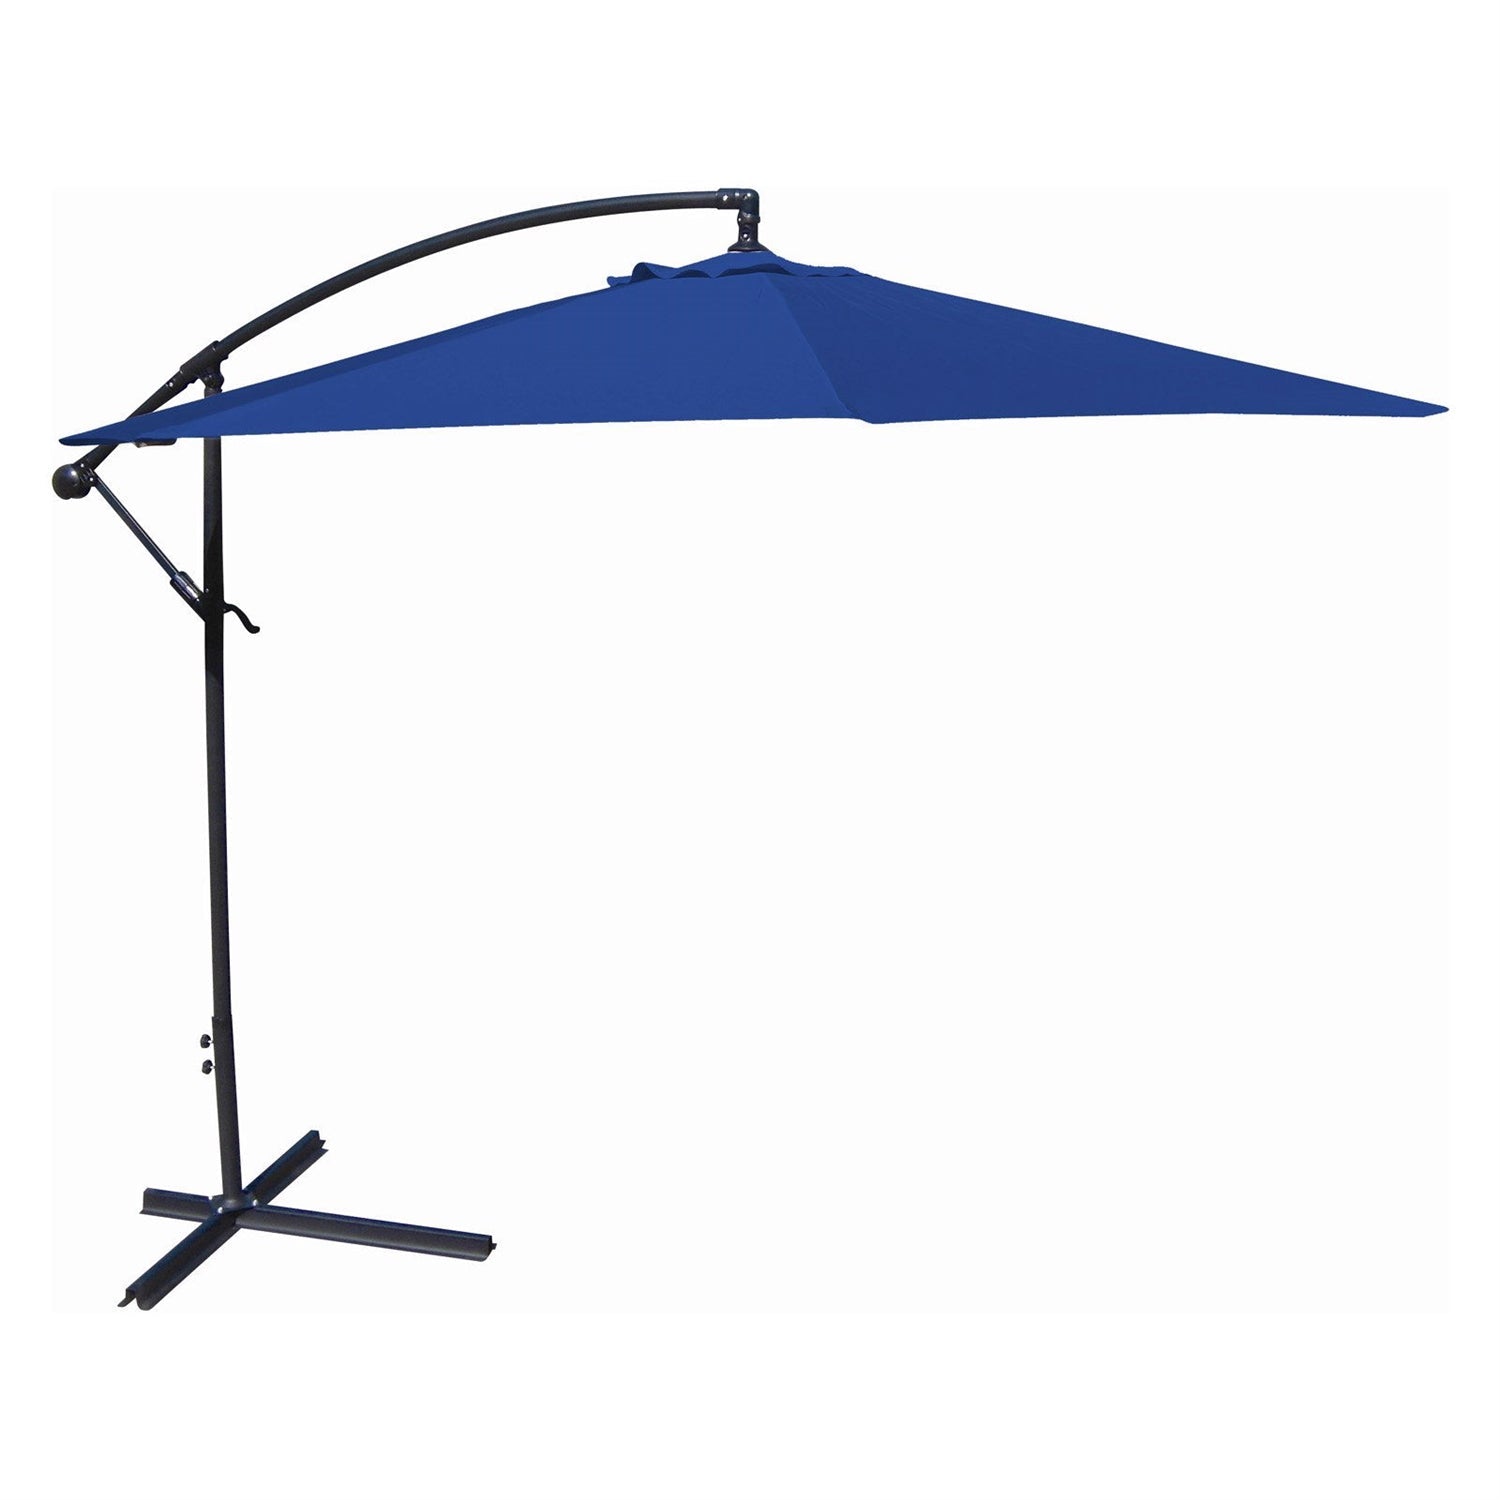 Outdoor > Outdoor Furniture > Patio Umbrella - 10-Ft Offset Cantilever Patio Umbrella With Royal Blue Canopy Shade